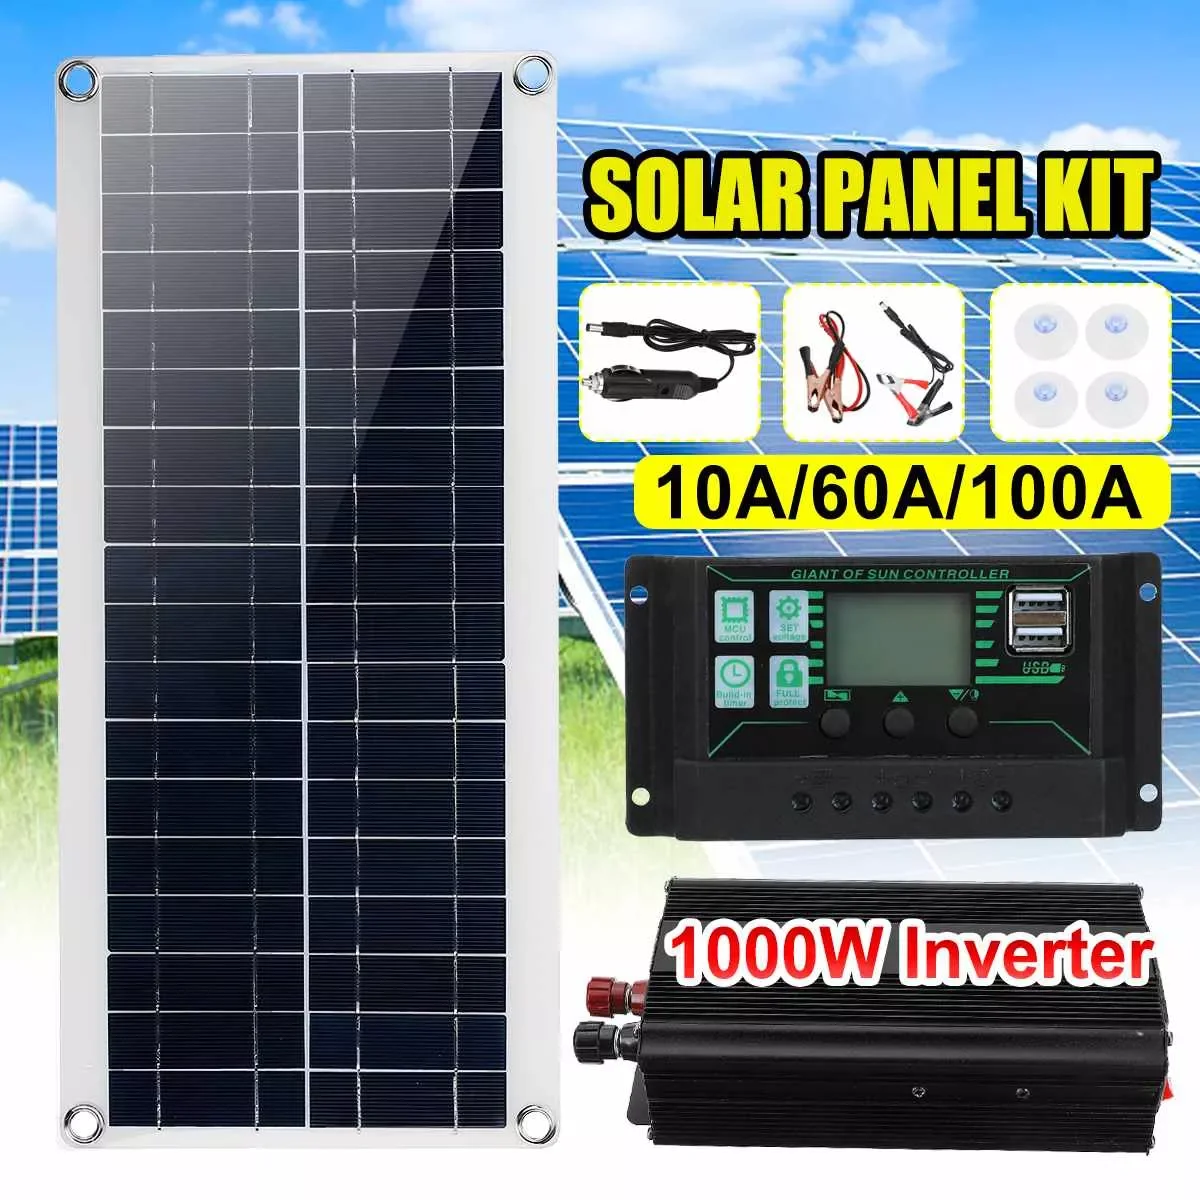 

1000W 12V Solar Panel Inverter Solar Panel System Kit Car Van Boat Camper Battery Charger+1000W Inverter Controller 10A/60A/100A